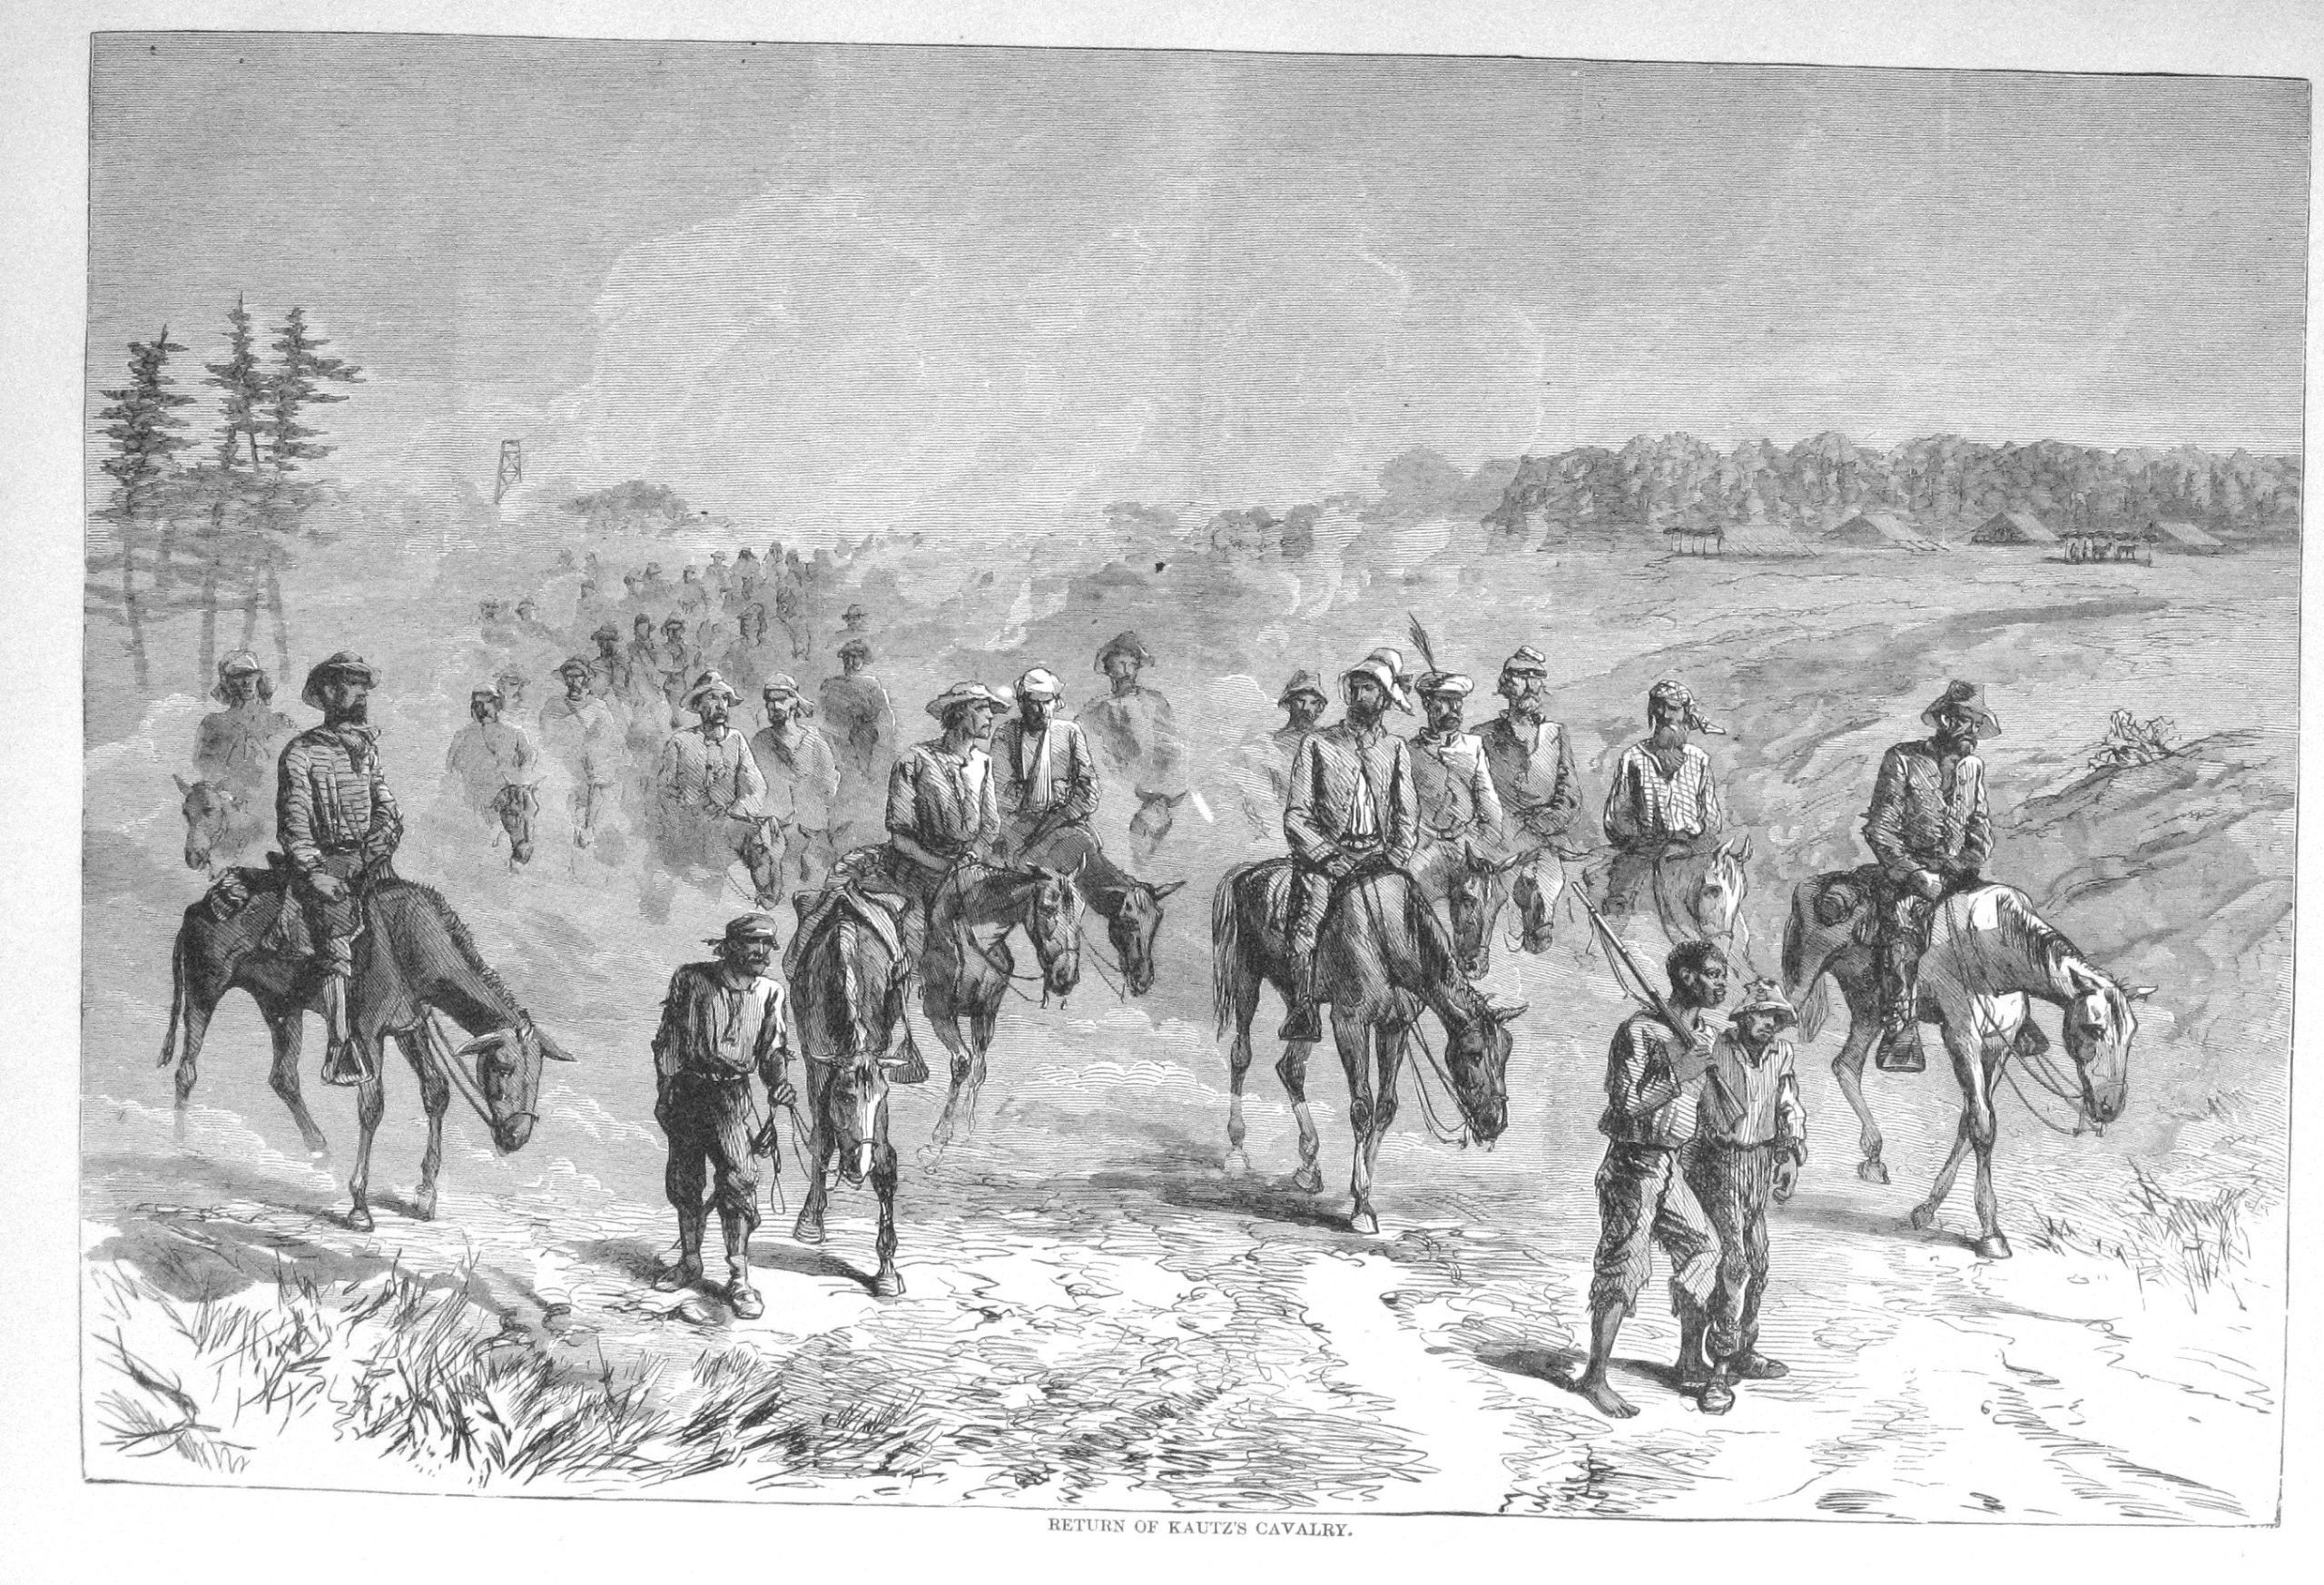 kautz cavalry scaled